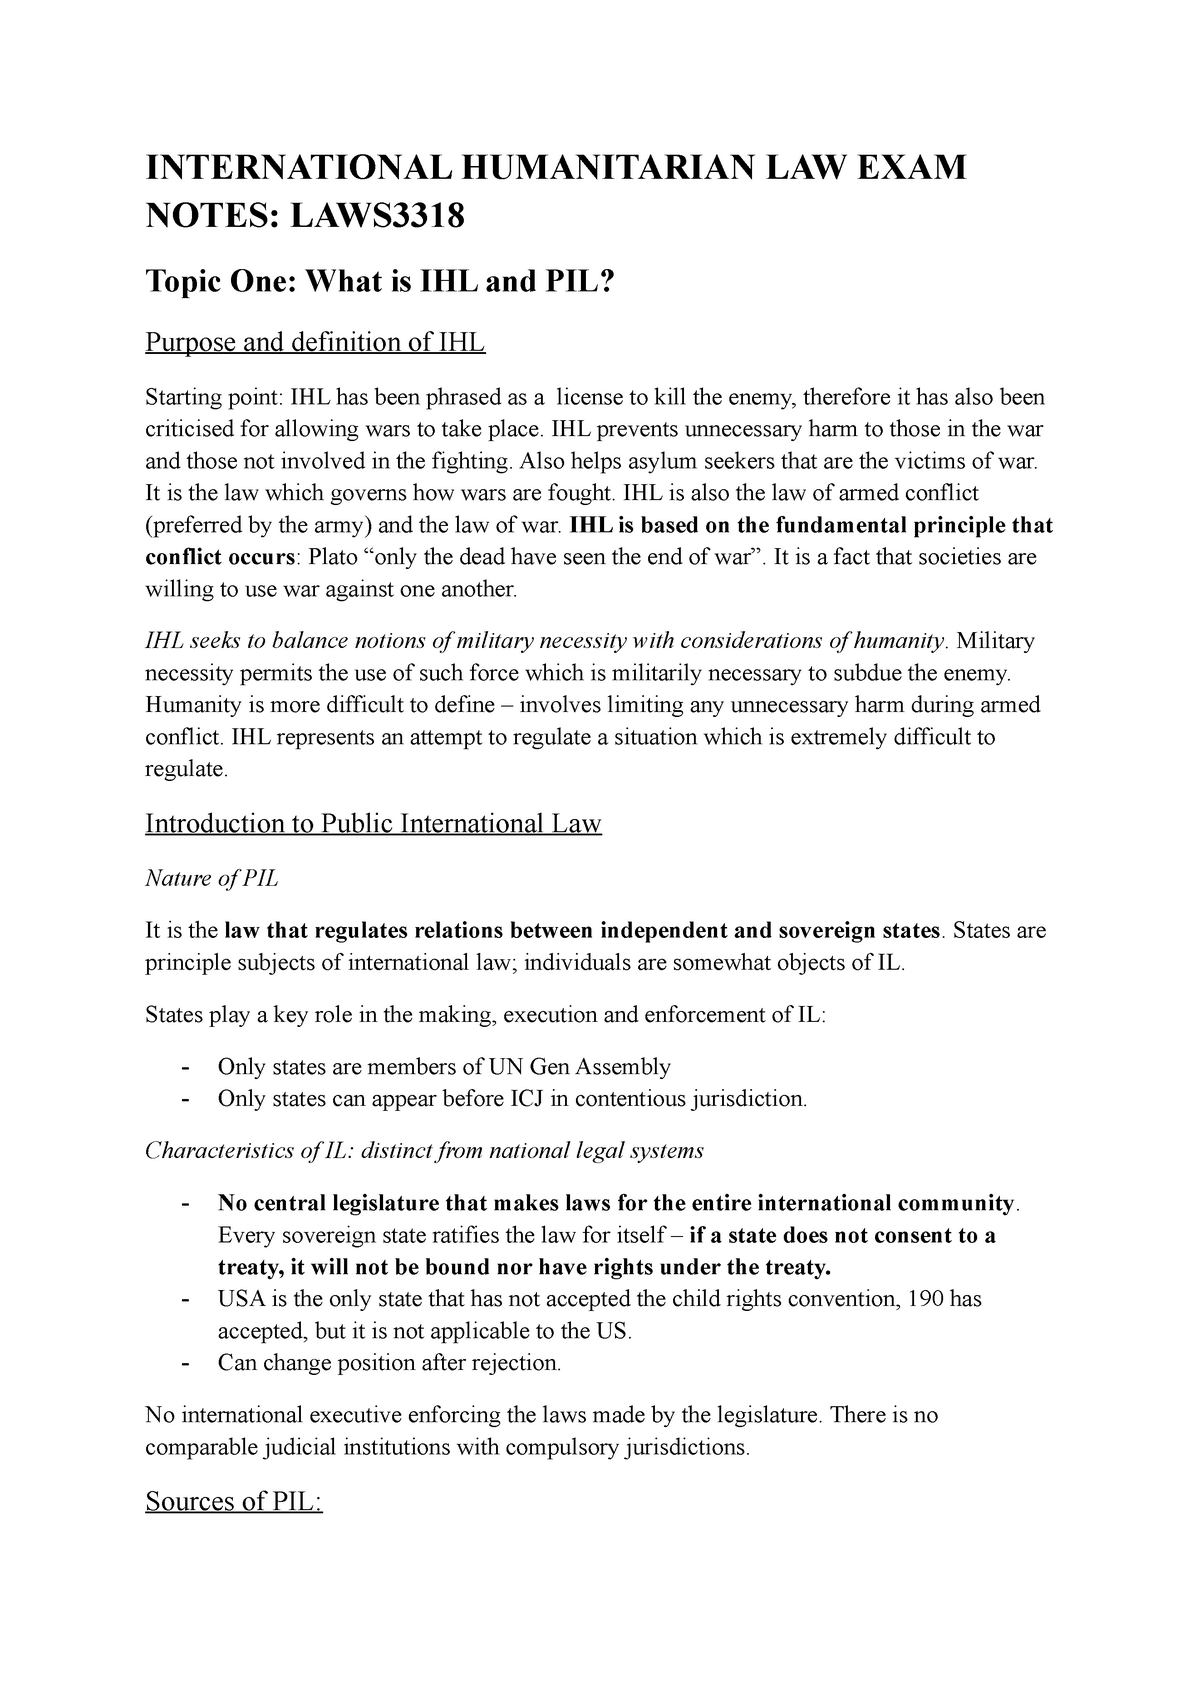 thesis topics in international humanitarian law